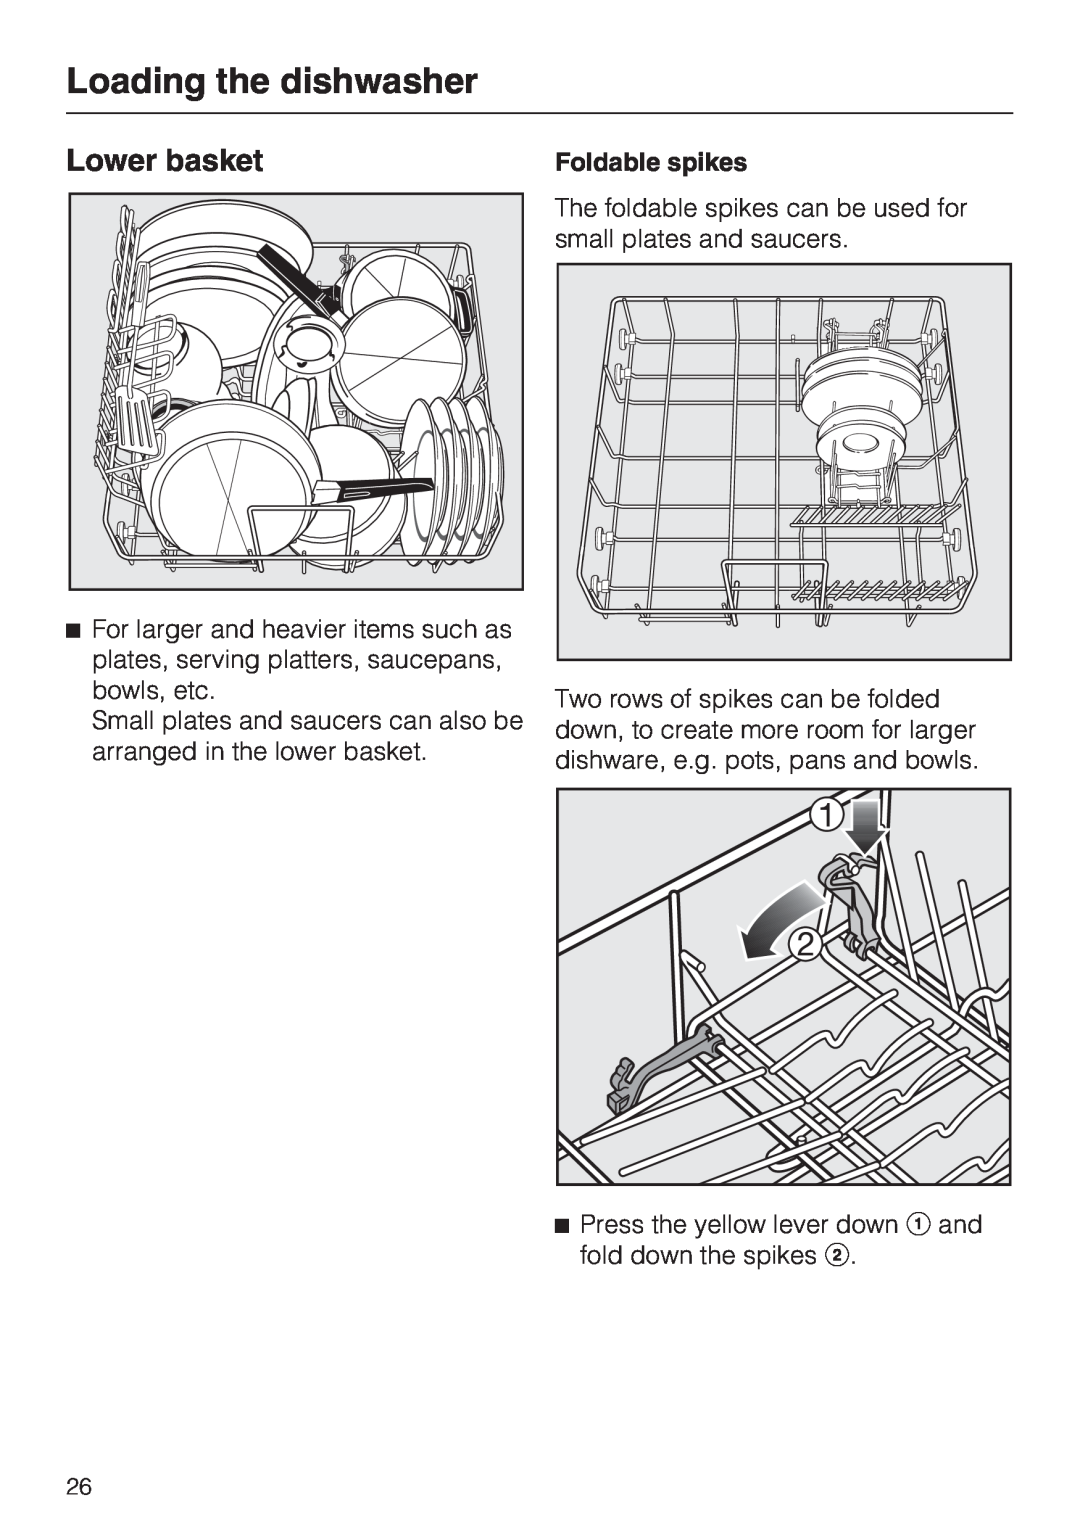 Miele G 2872 operating instructions Lower basket, Loading the dishwasher, Foldable spikes 